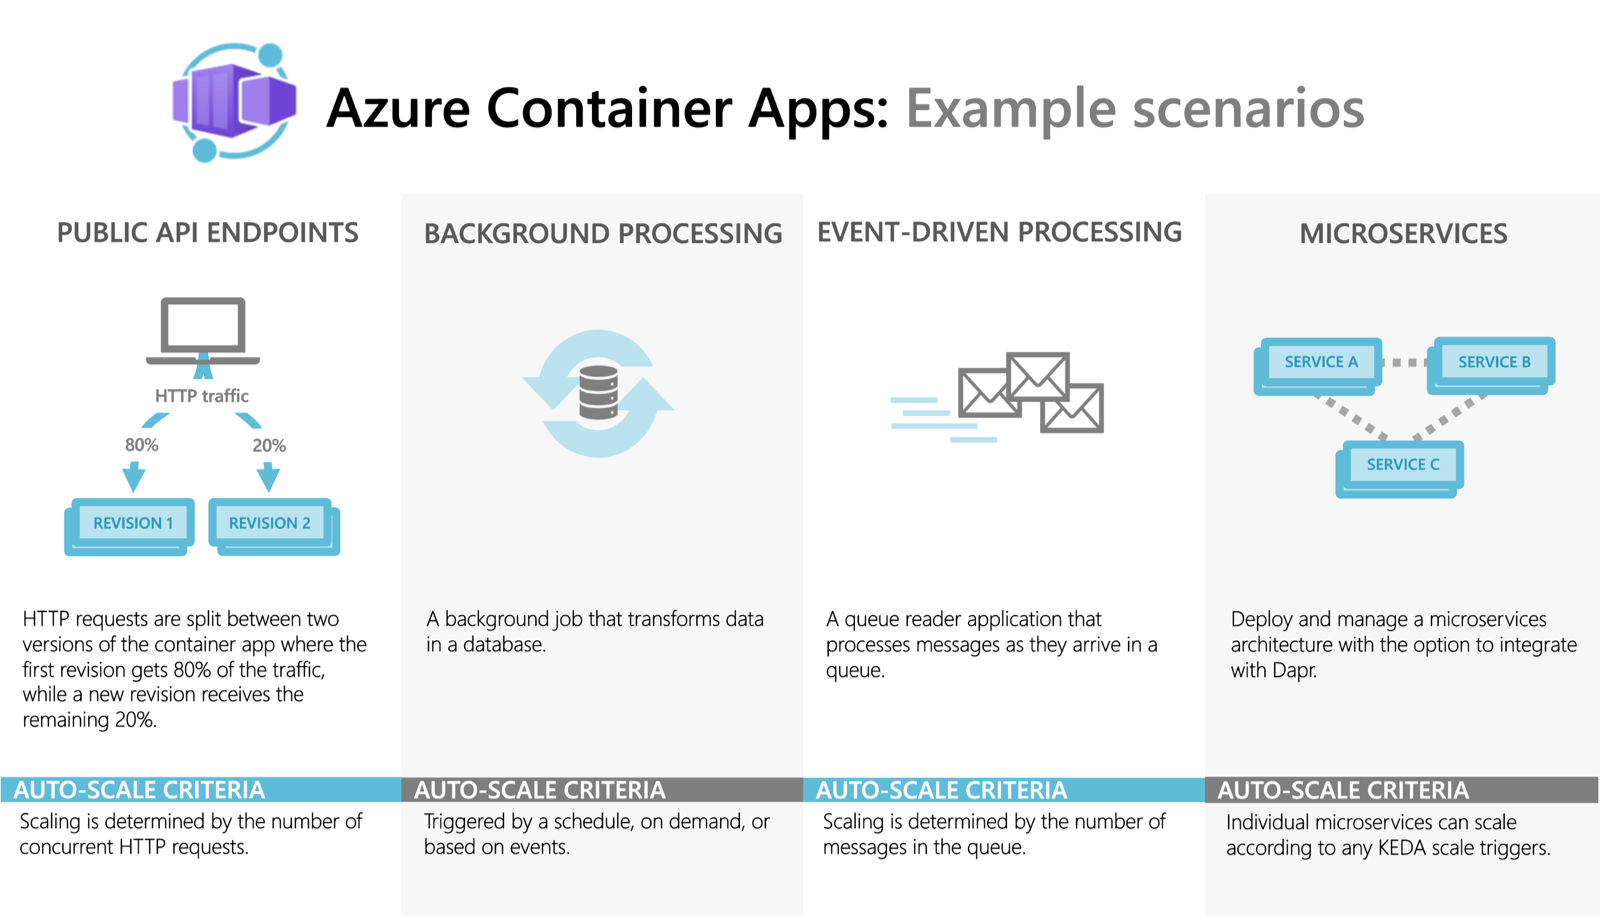 Azure Container Apps 的範例案例。